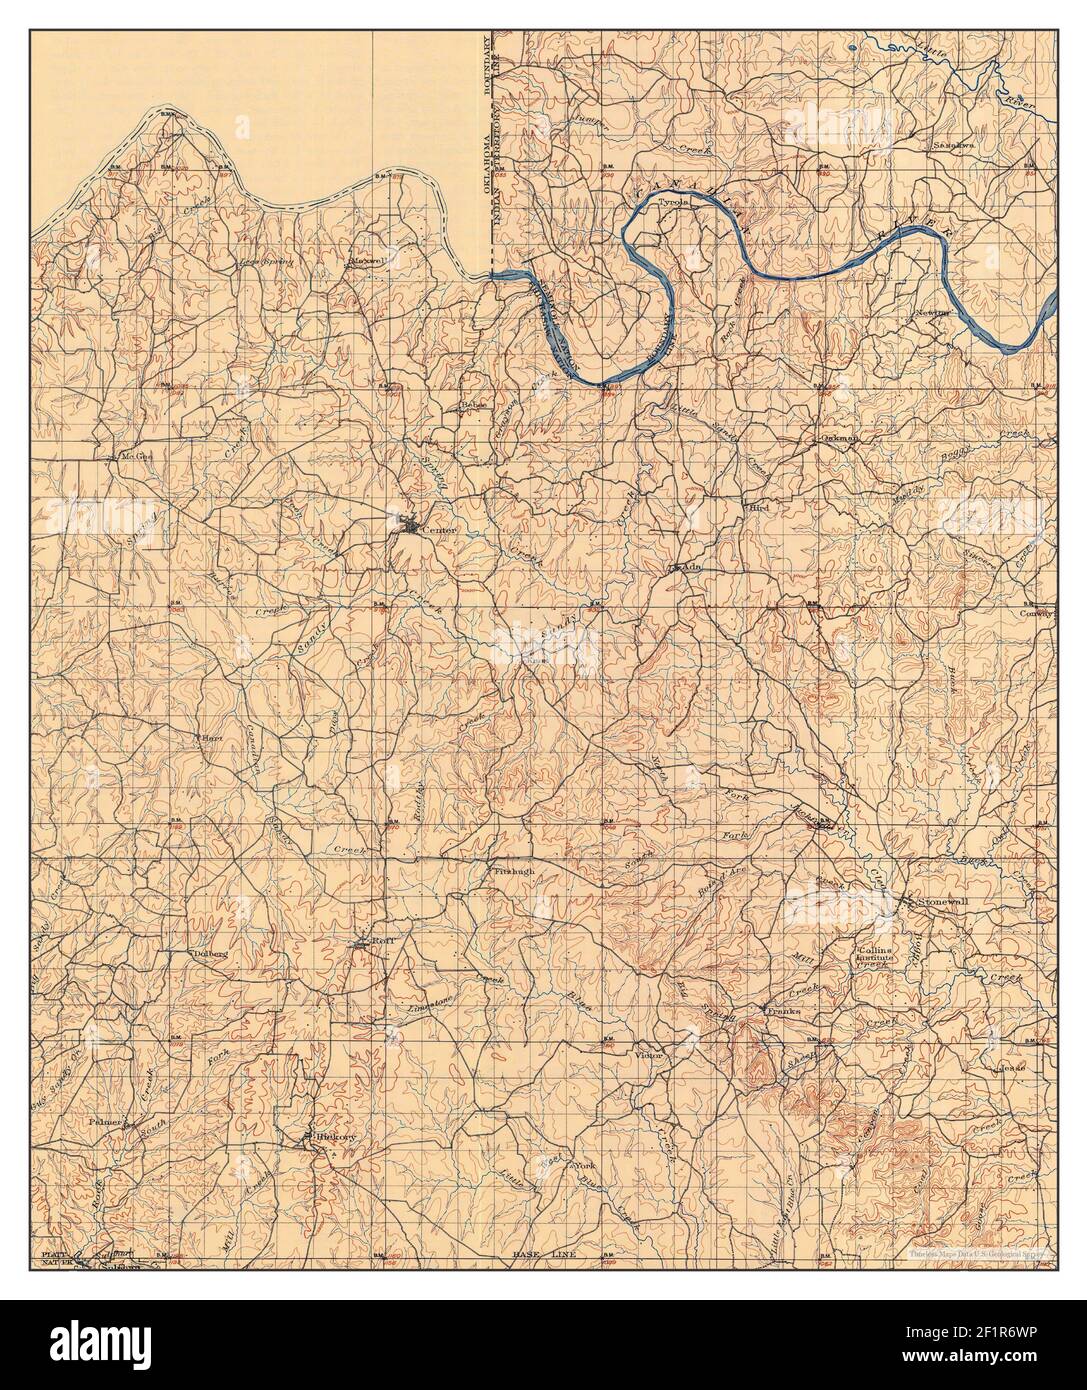 Stonewall, Oklahoma, map 1901, 1:125000, United States of America by Timeless Maps, data U.S. Geological Survey Stock Photo